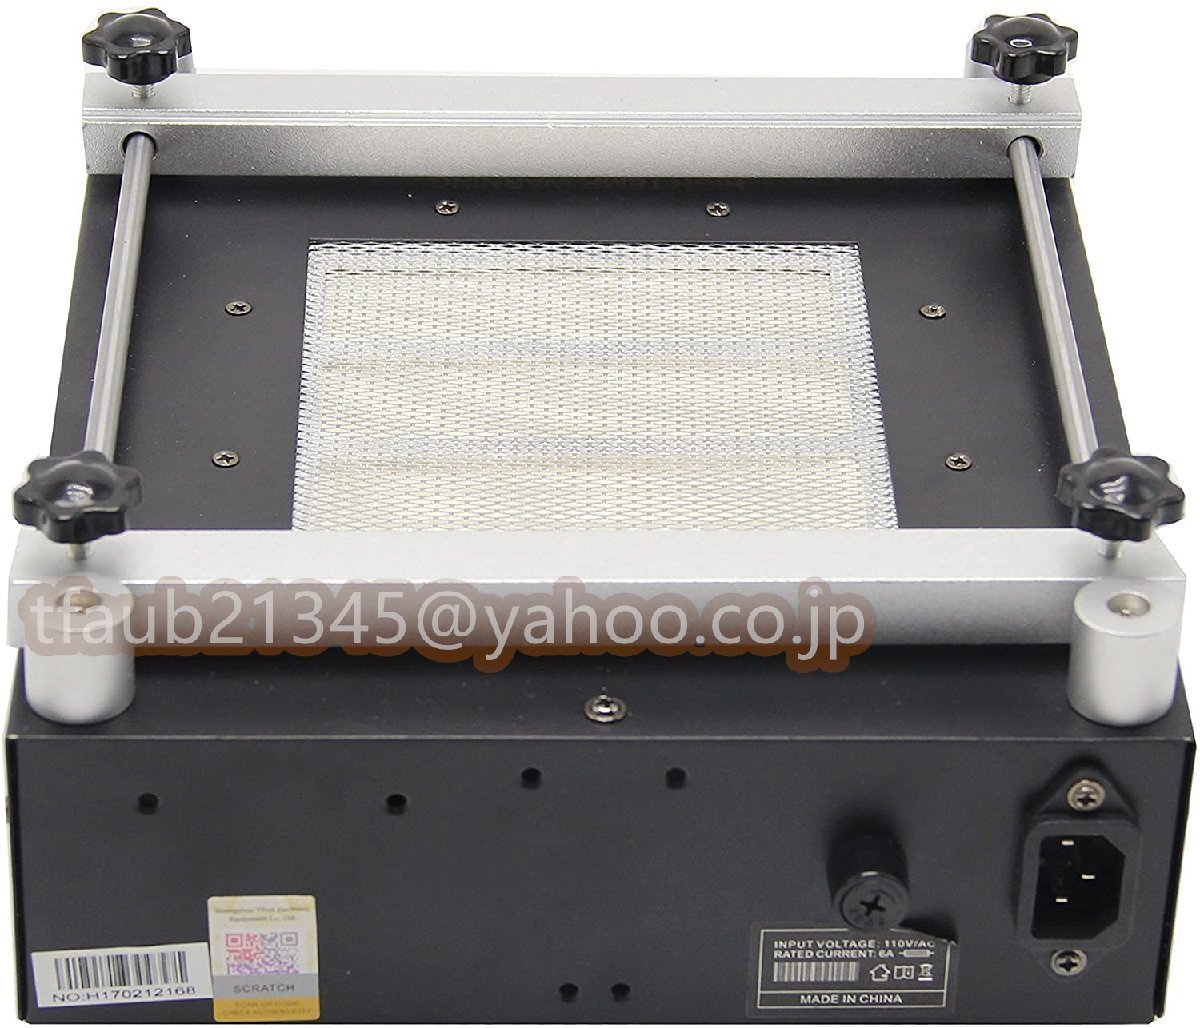 PCB恒温ホットプレート PCB予熱ステーション 回路基板の予熱 デジタル表示あり 温度制御50℃-350℃ 溶接機キット_画像3